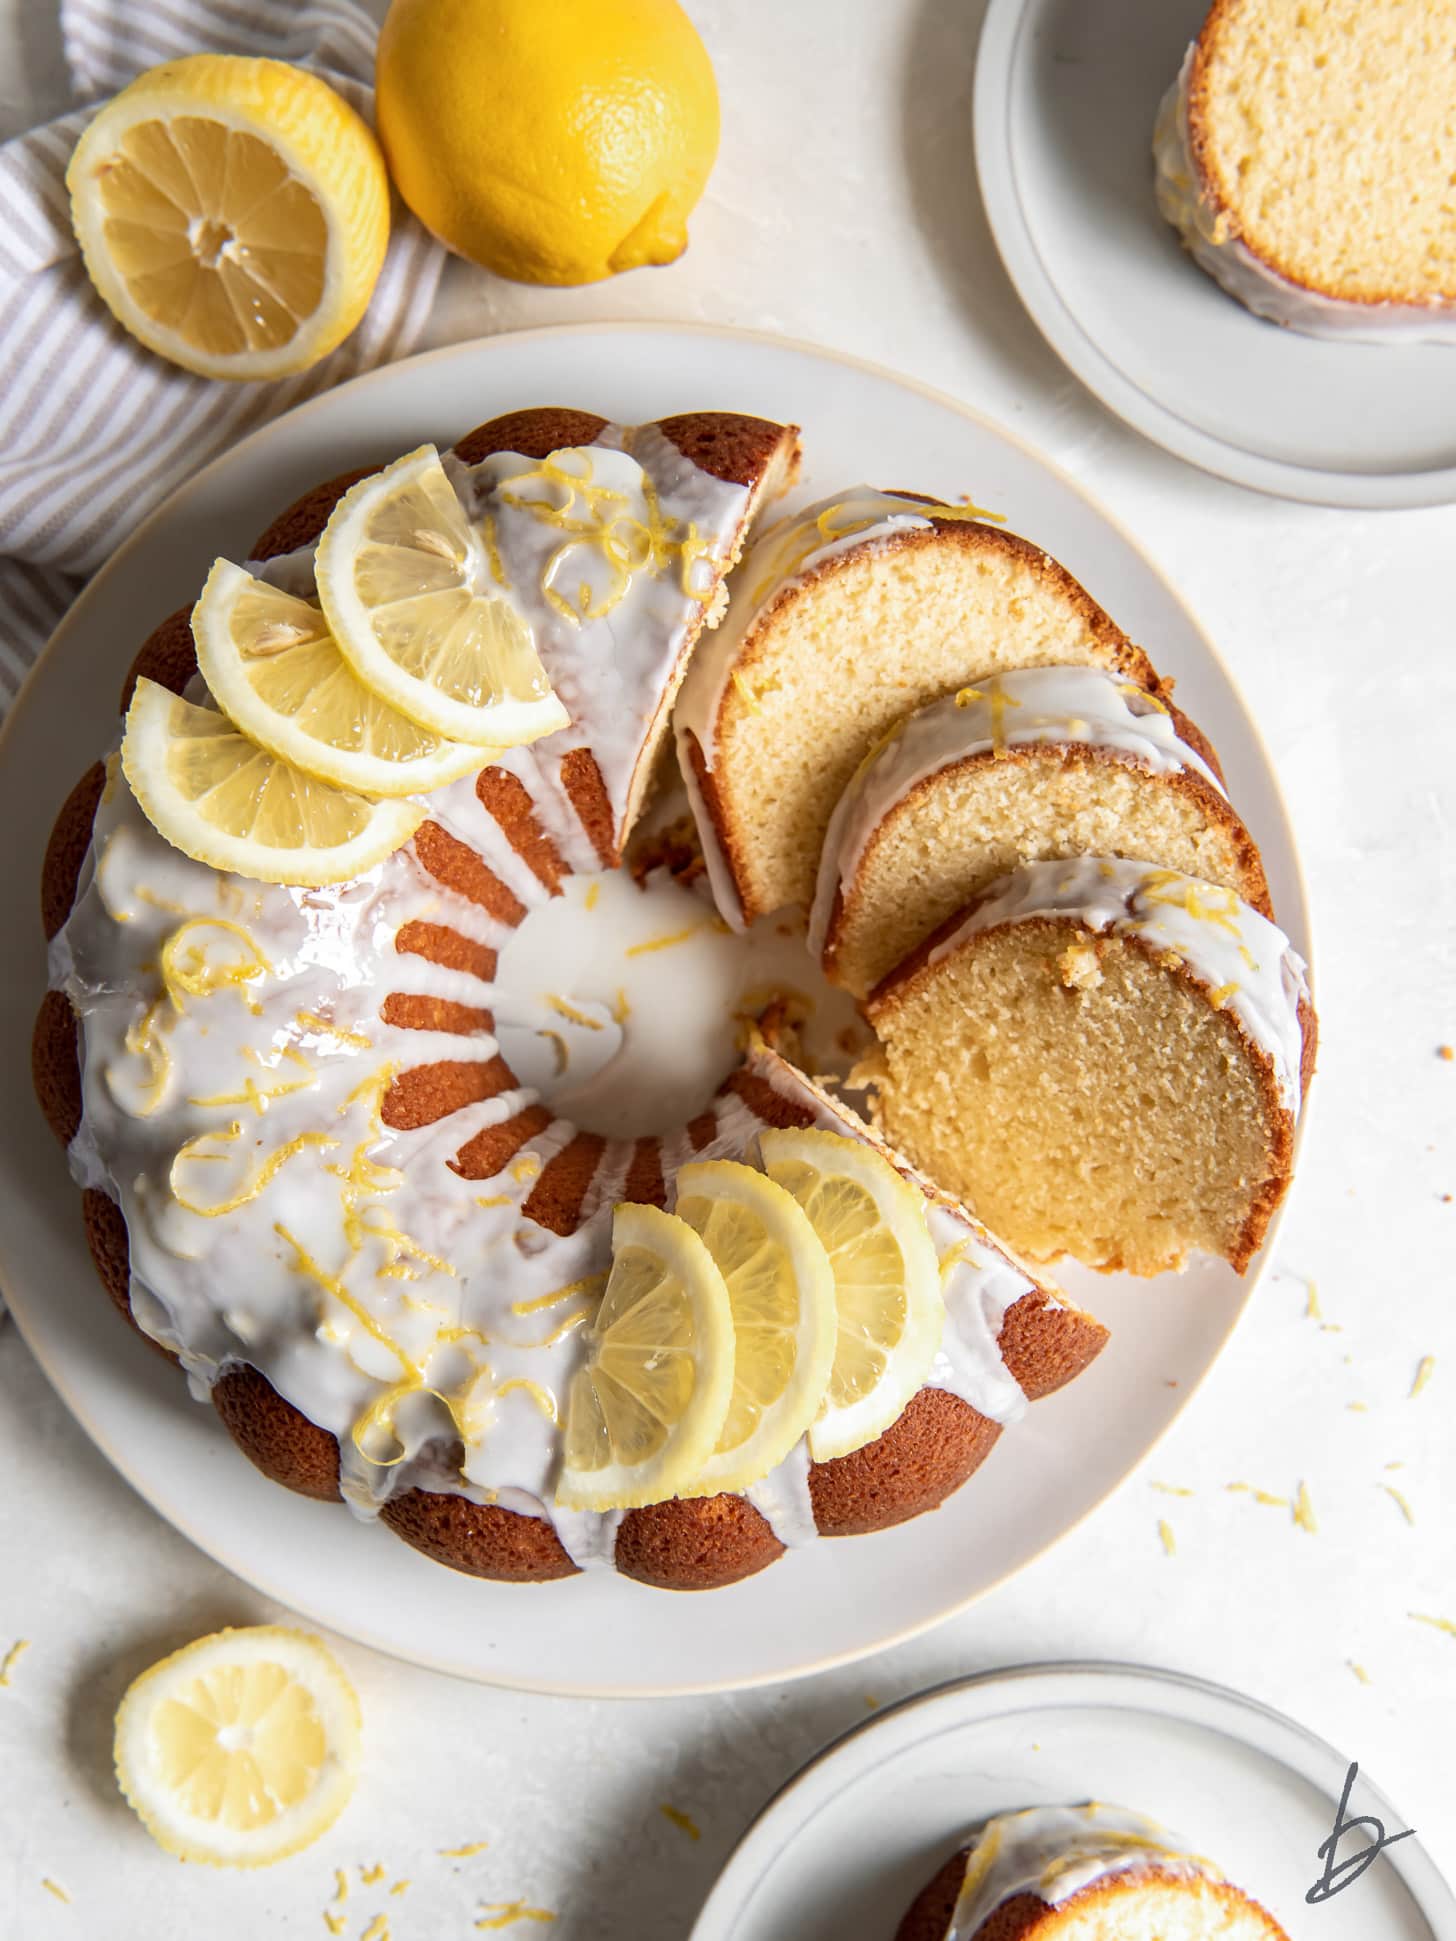 lemon bundt cake with lemon glaze and lemon slices as garnish.